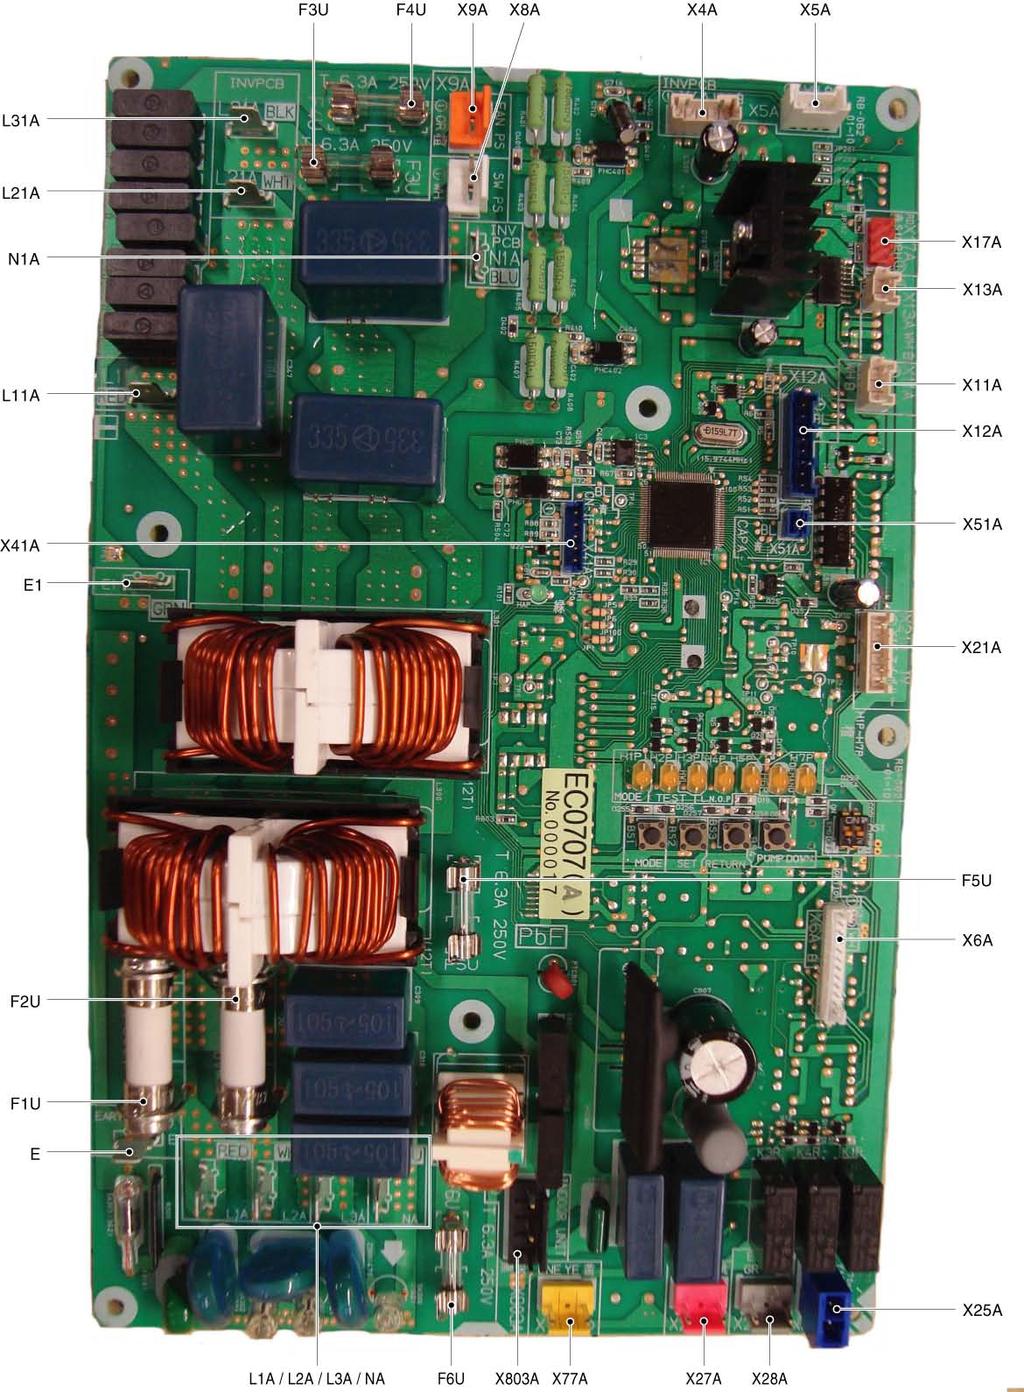 ESIE08-0 PCB Layout Control & inverter PCB (AP) The